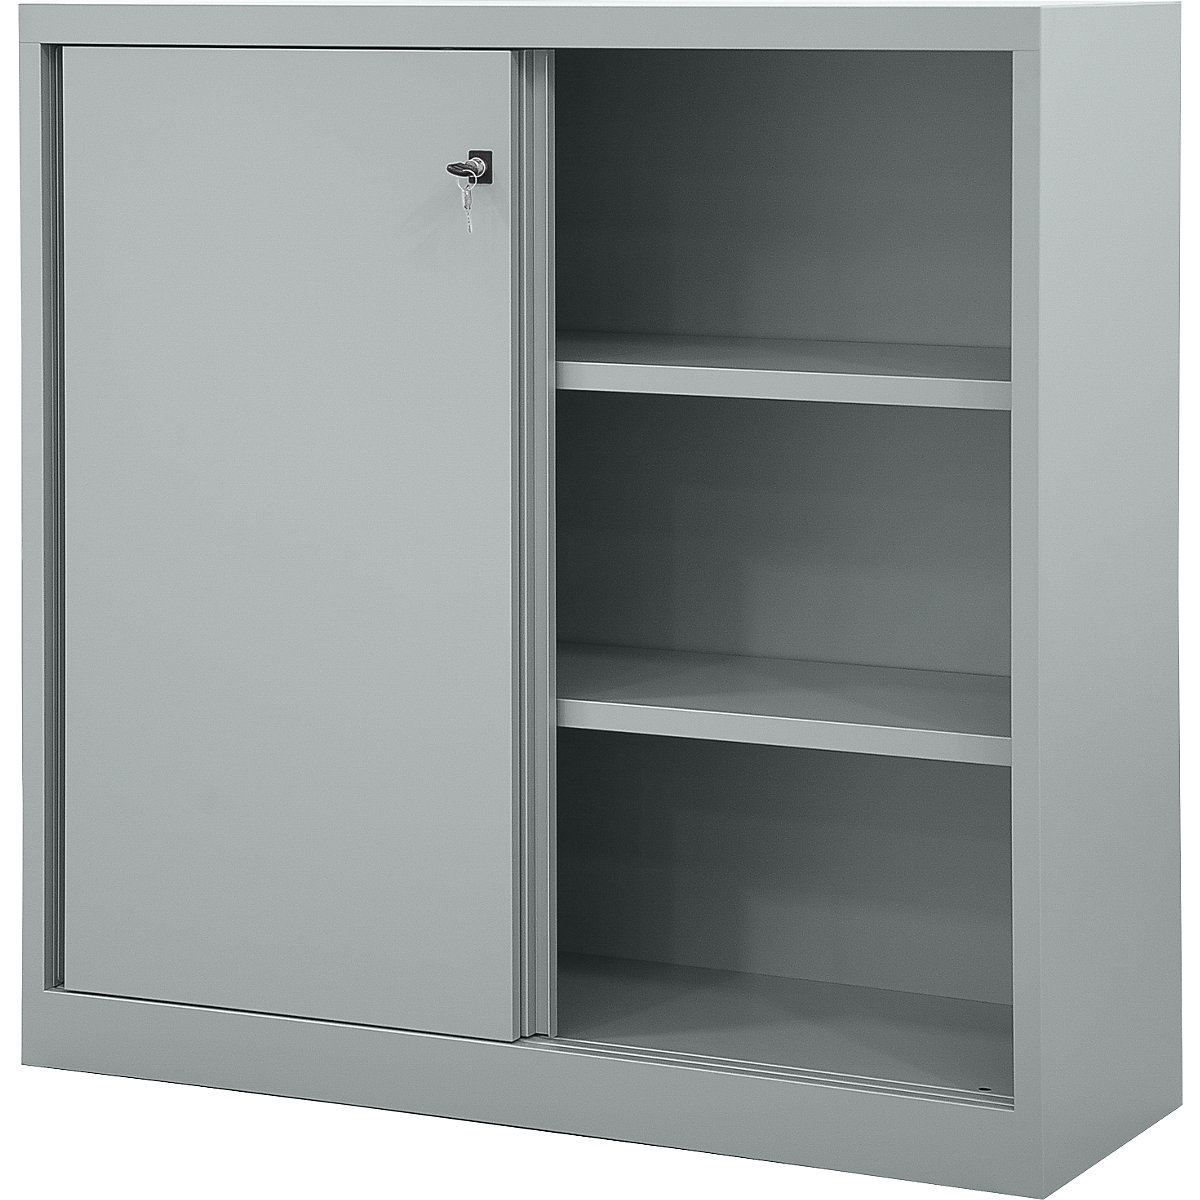 ECO sliding door cupboard – BISLEY, 2 shelves, 3 file heights, silver-7